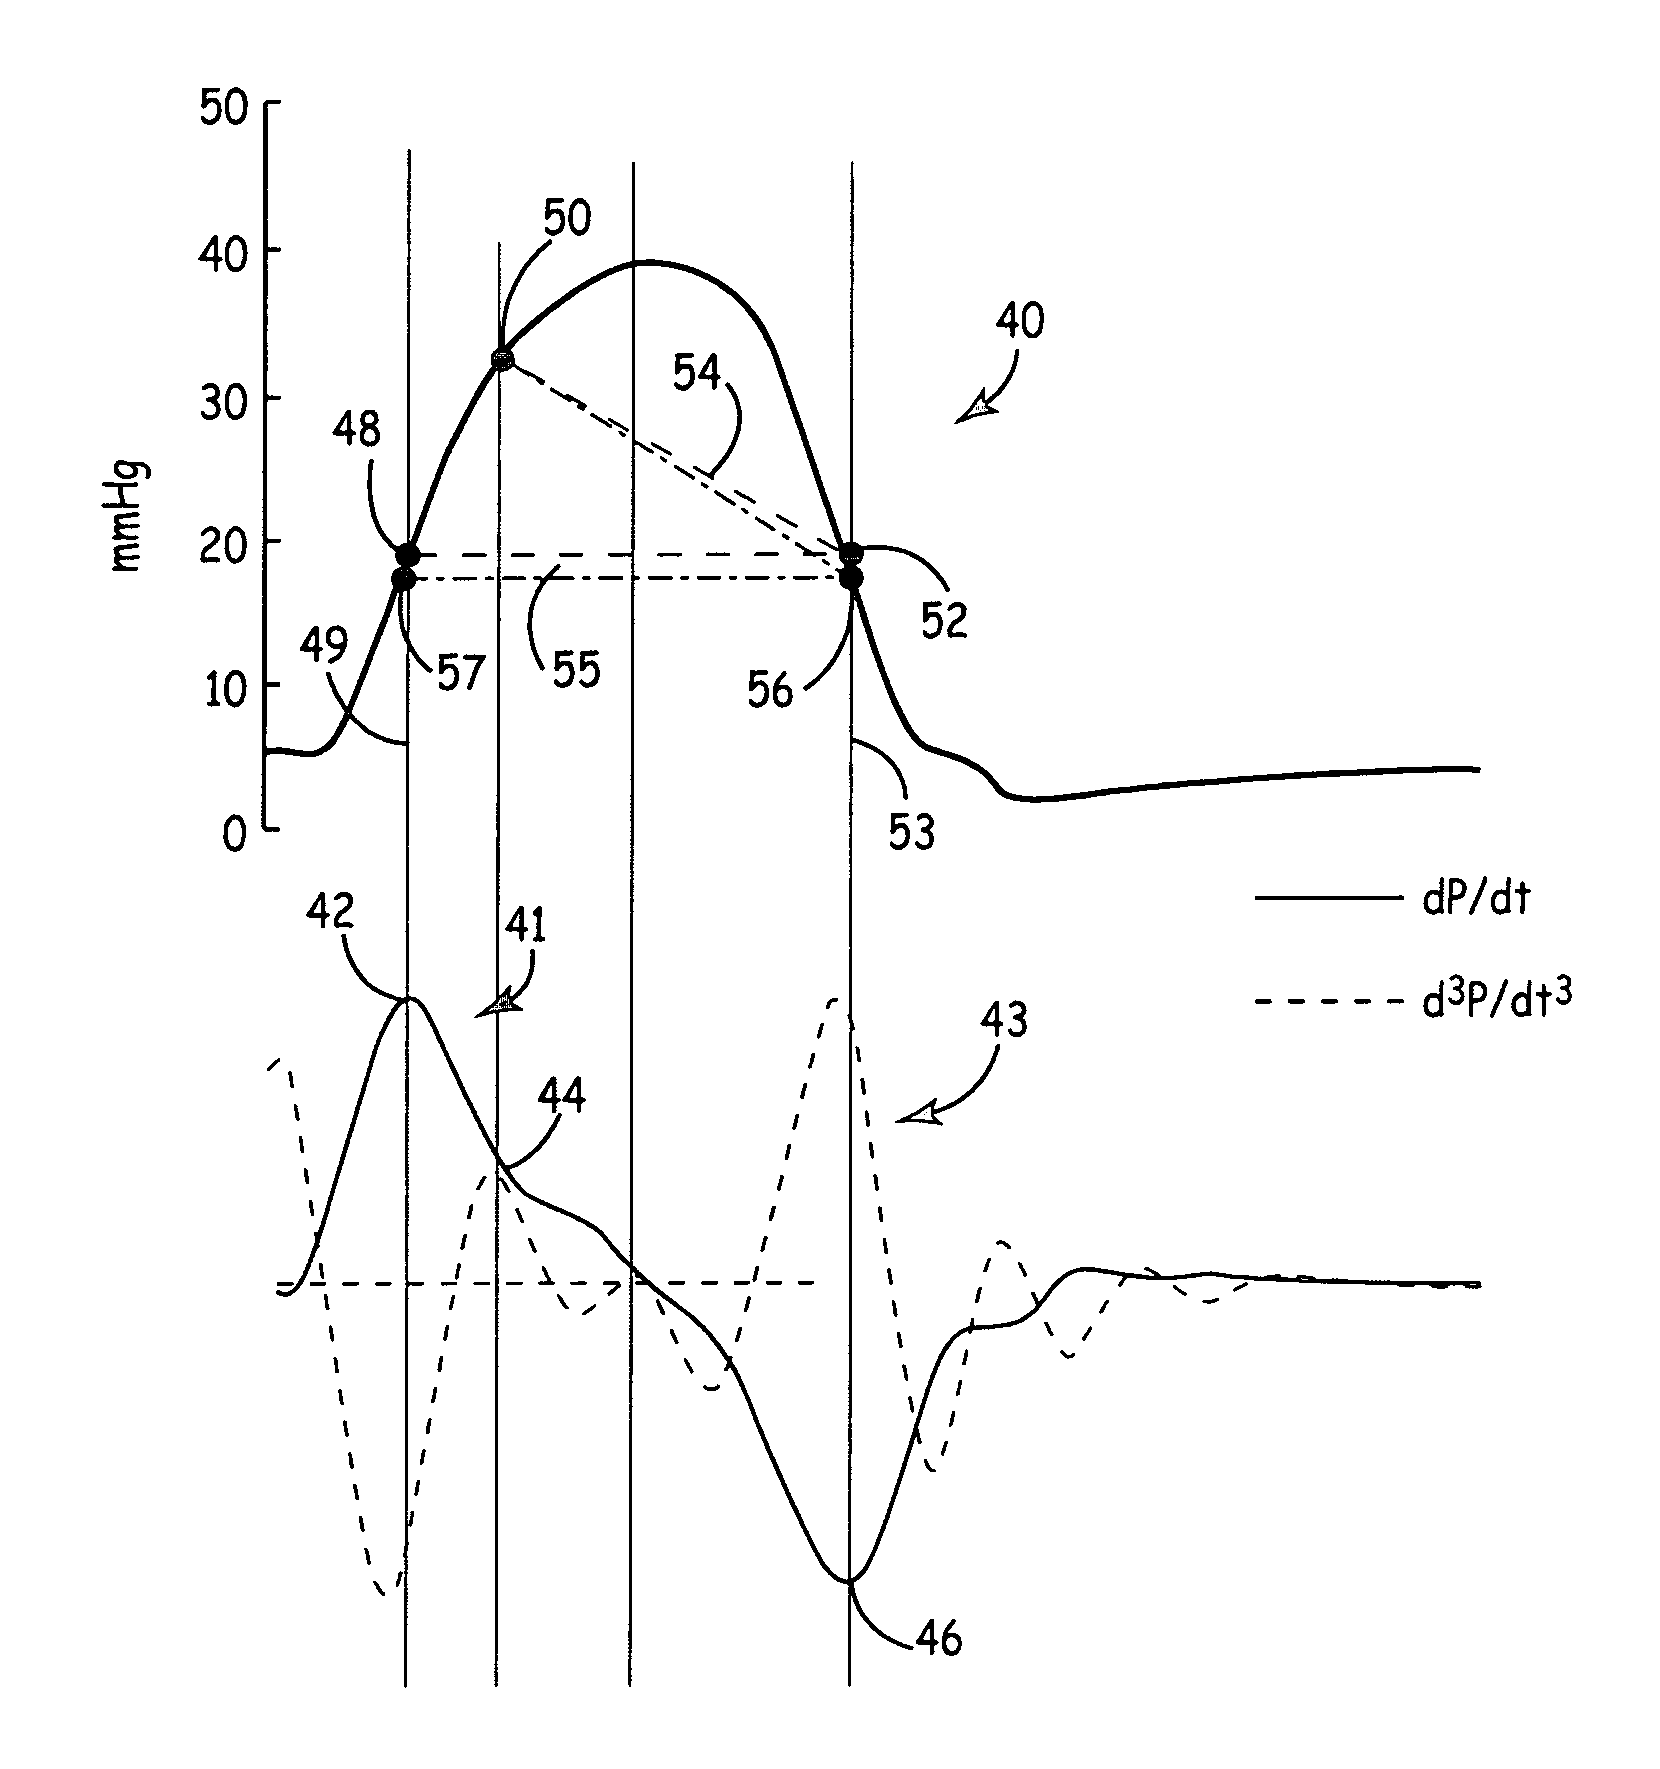 Derivation of flow contour from pressure waveform